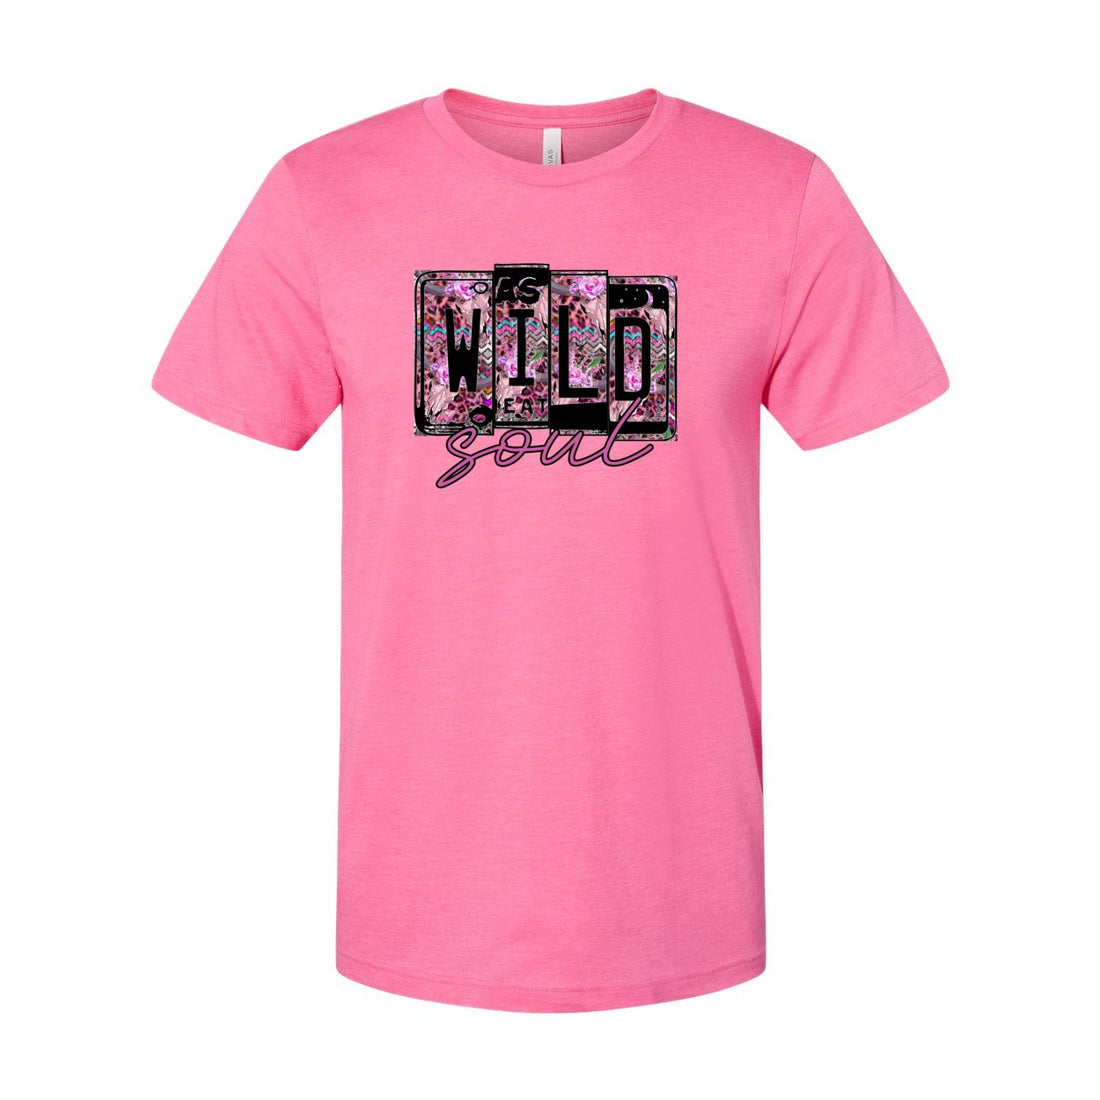 Wild Pink Soul Plates Jersey Tee - T-Shirts - Positively Sassy - Wild Pink Soul Plates Jersey Tee